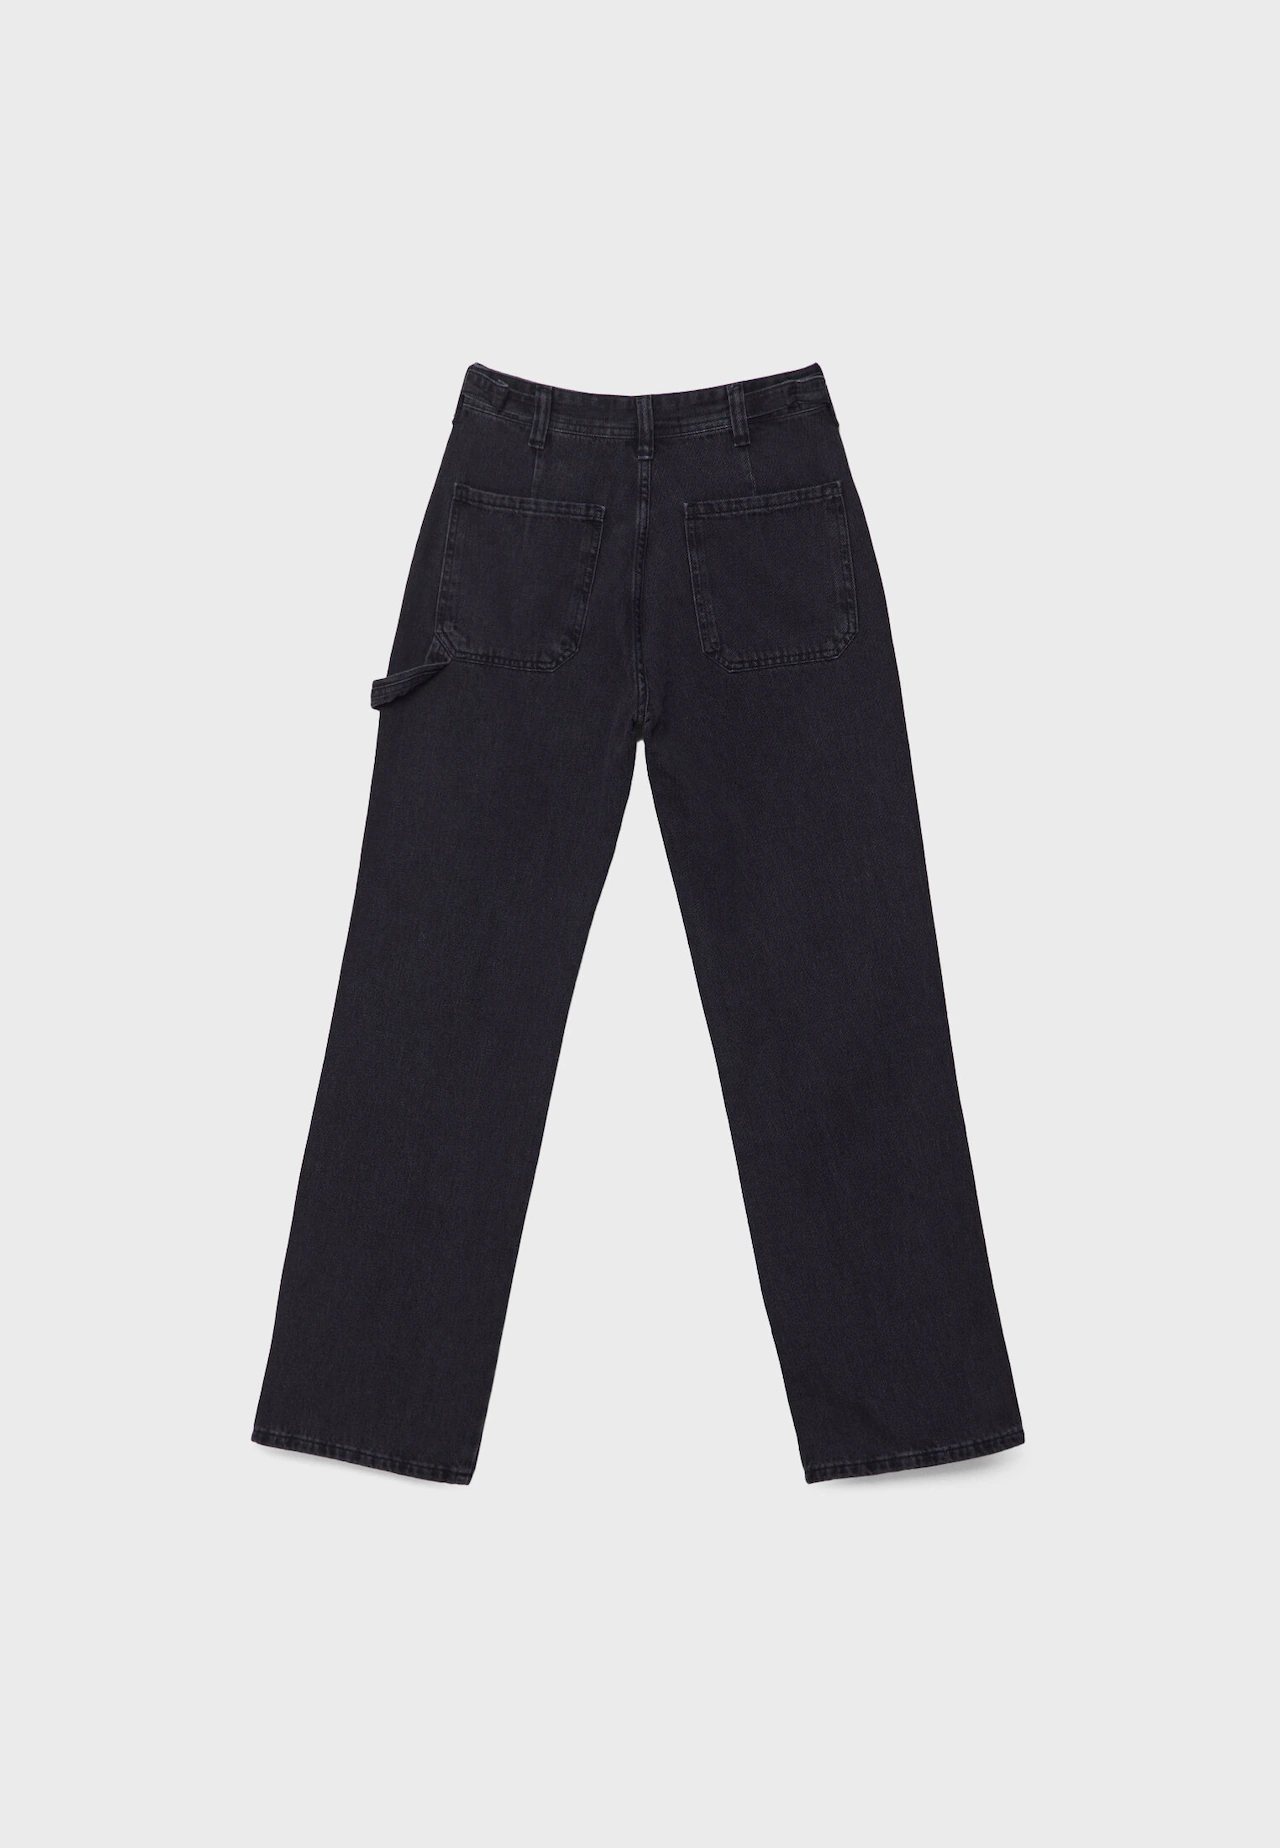 Carpenter jeans with adjustable waistband - Women\'s fashion | Stradivarius  United States